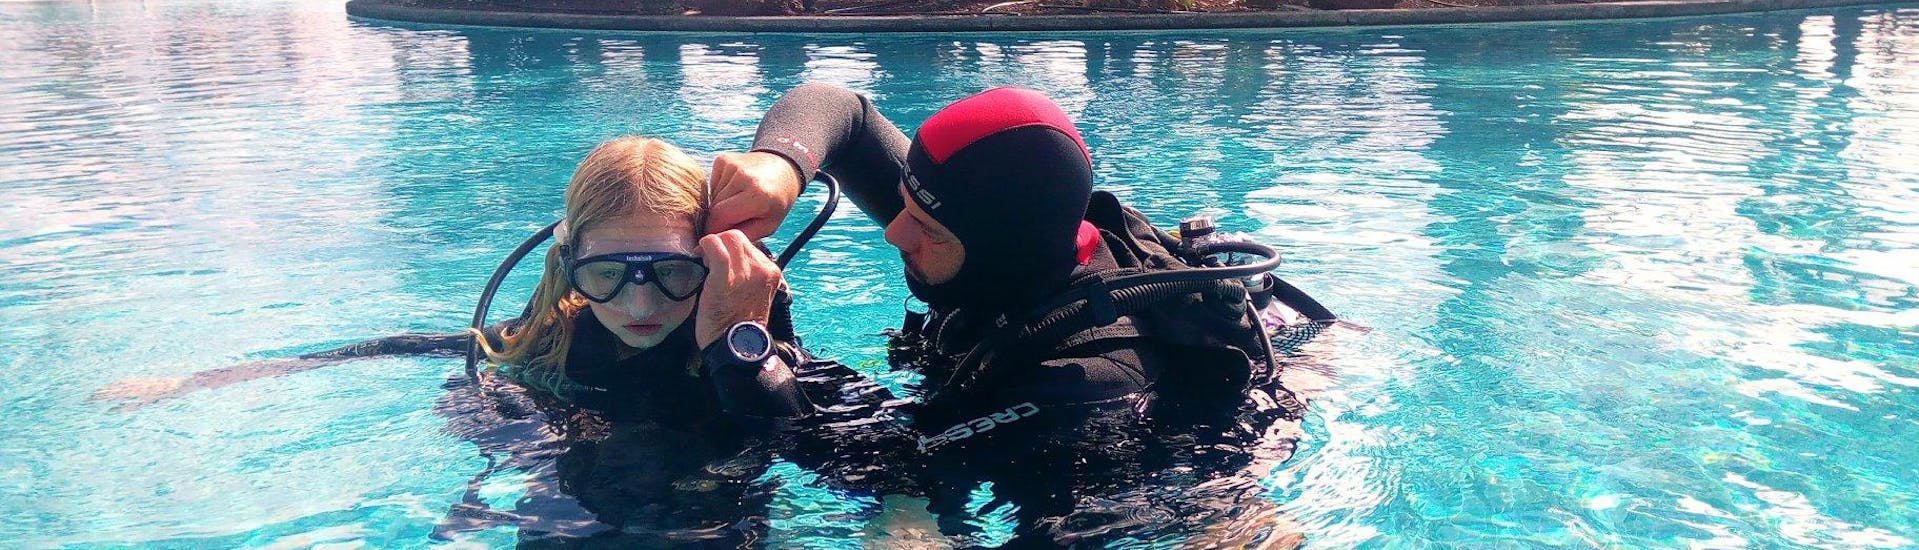 Scuba Diving Bubblemaker Course for Kids in Costa Calma.